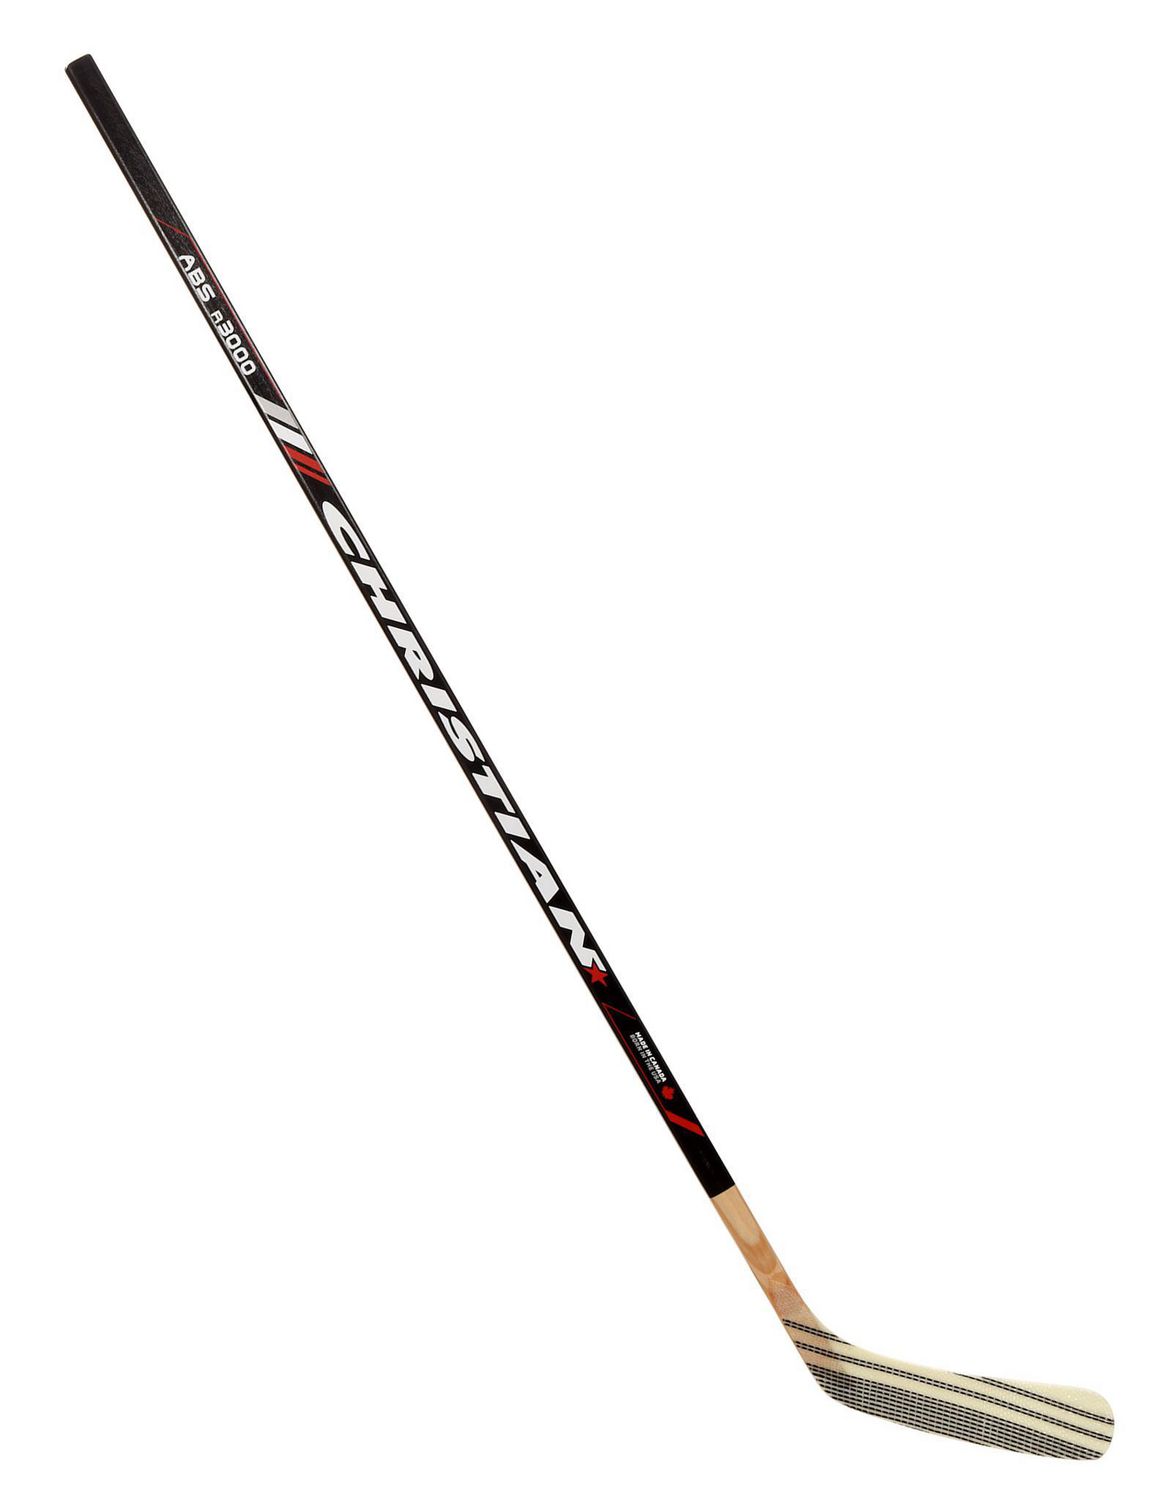 Warrior Hockey Stick - 57 - Wood - Left Hand Curve, Junior - Regular Flex  